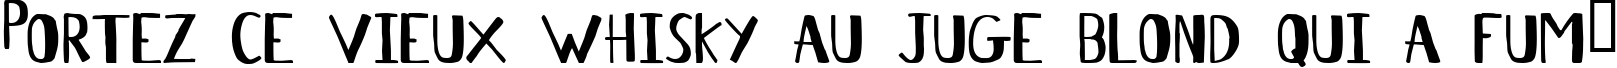 Пример написания шрифтом Antelope H текста на французском